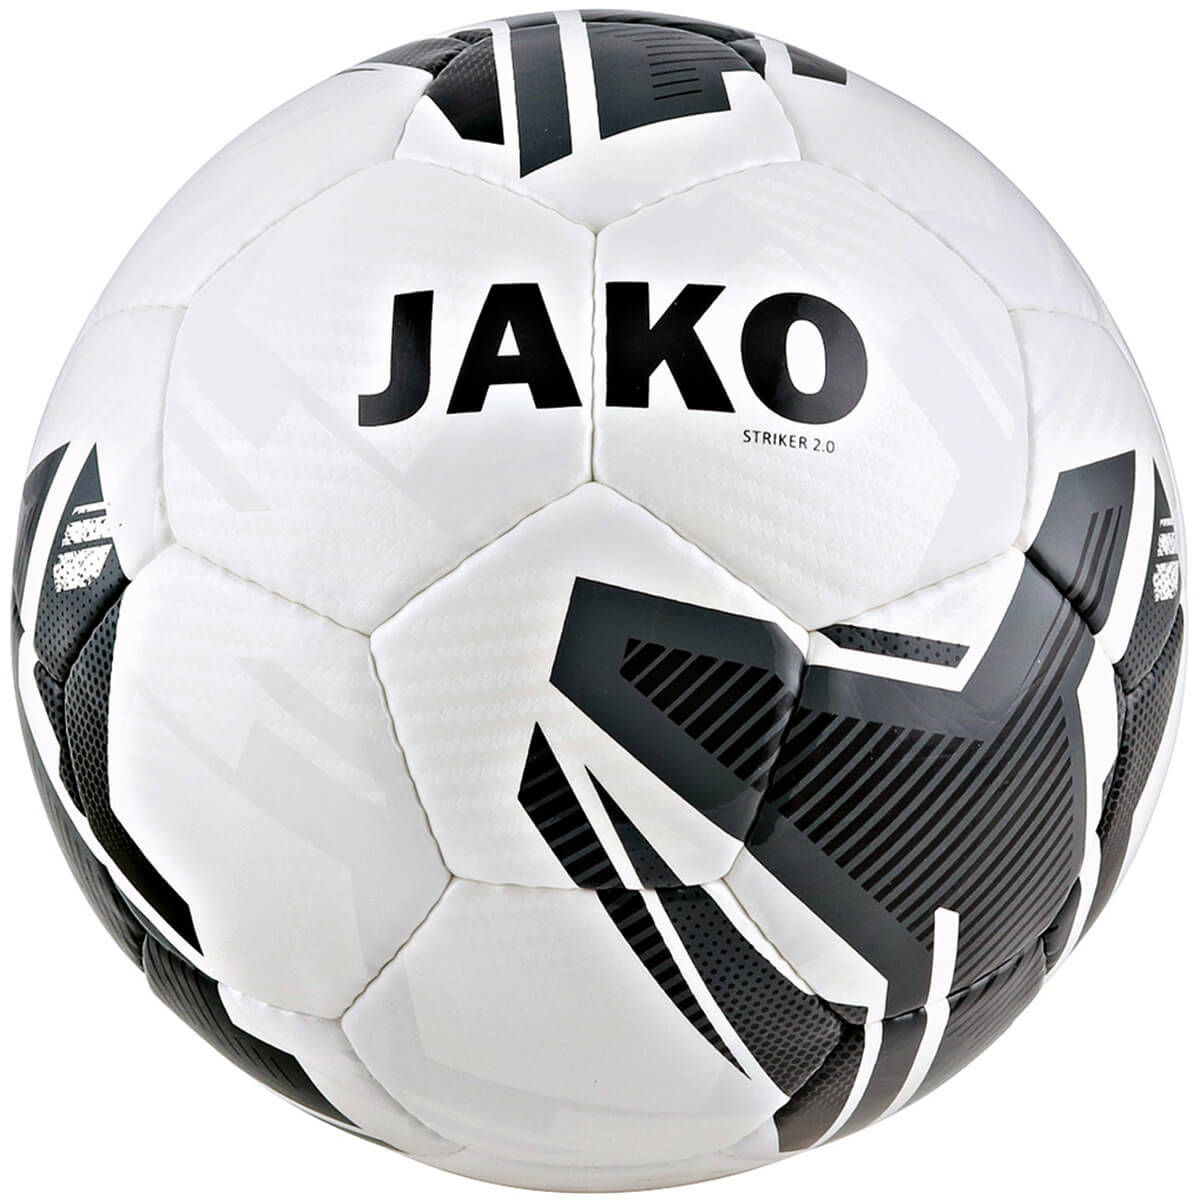 JAKO 2353-21 Training Ball Striker 2.0 White/Anthracite